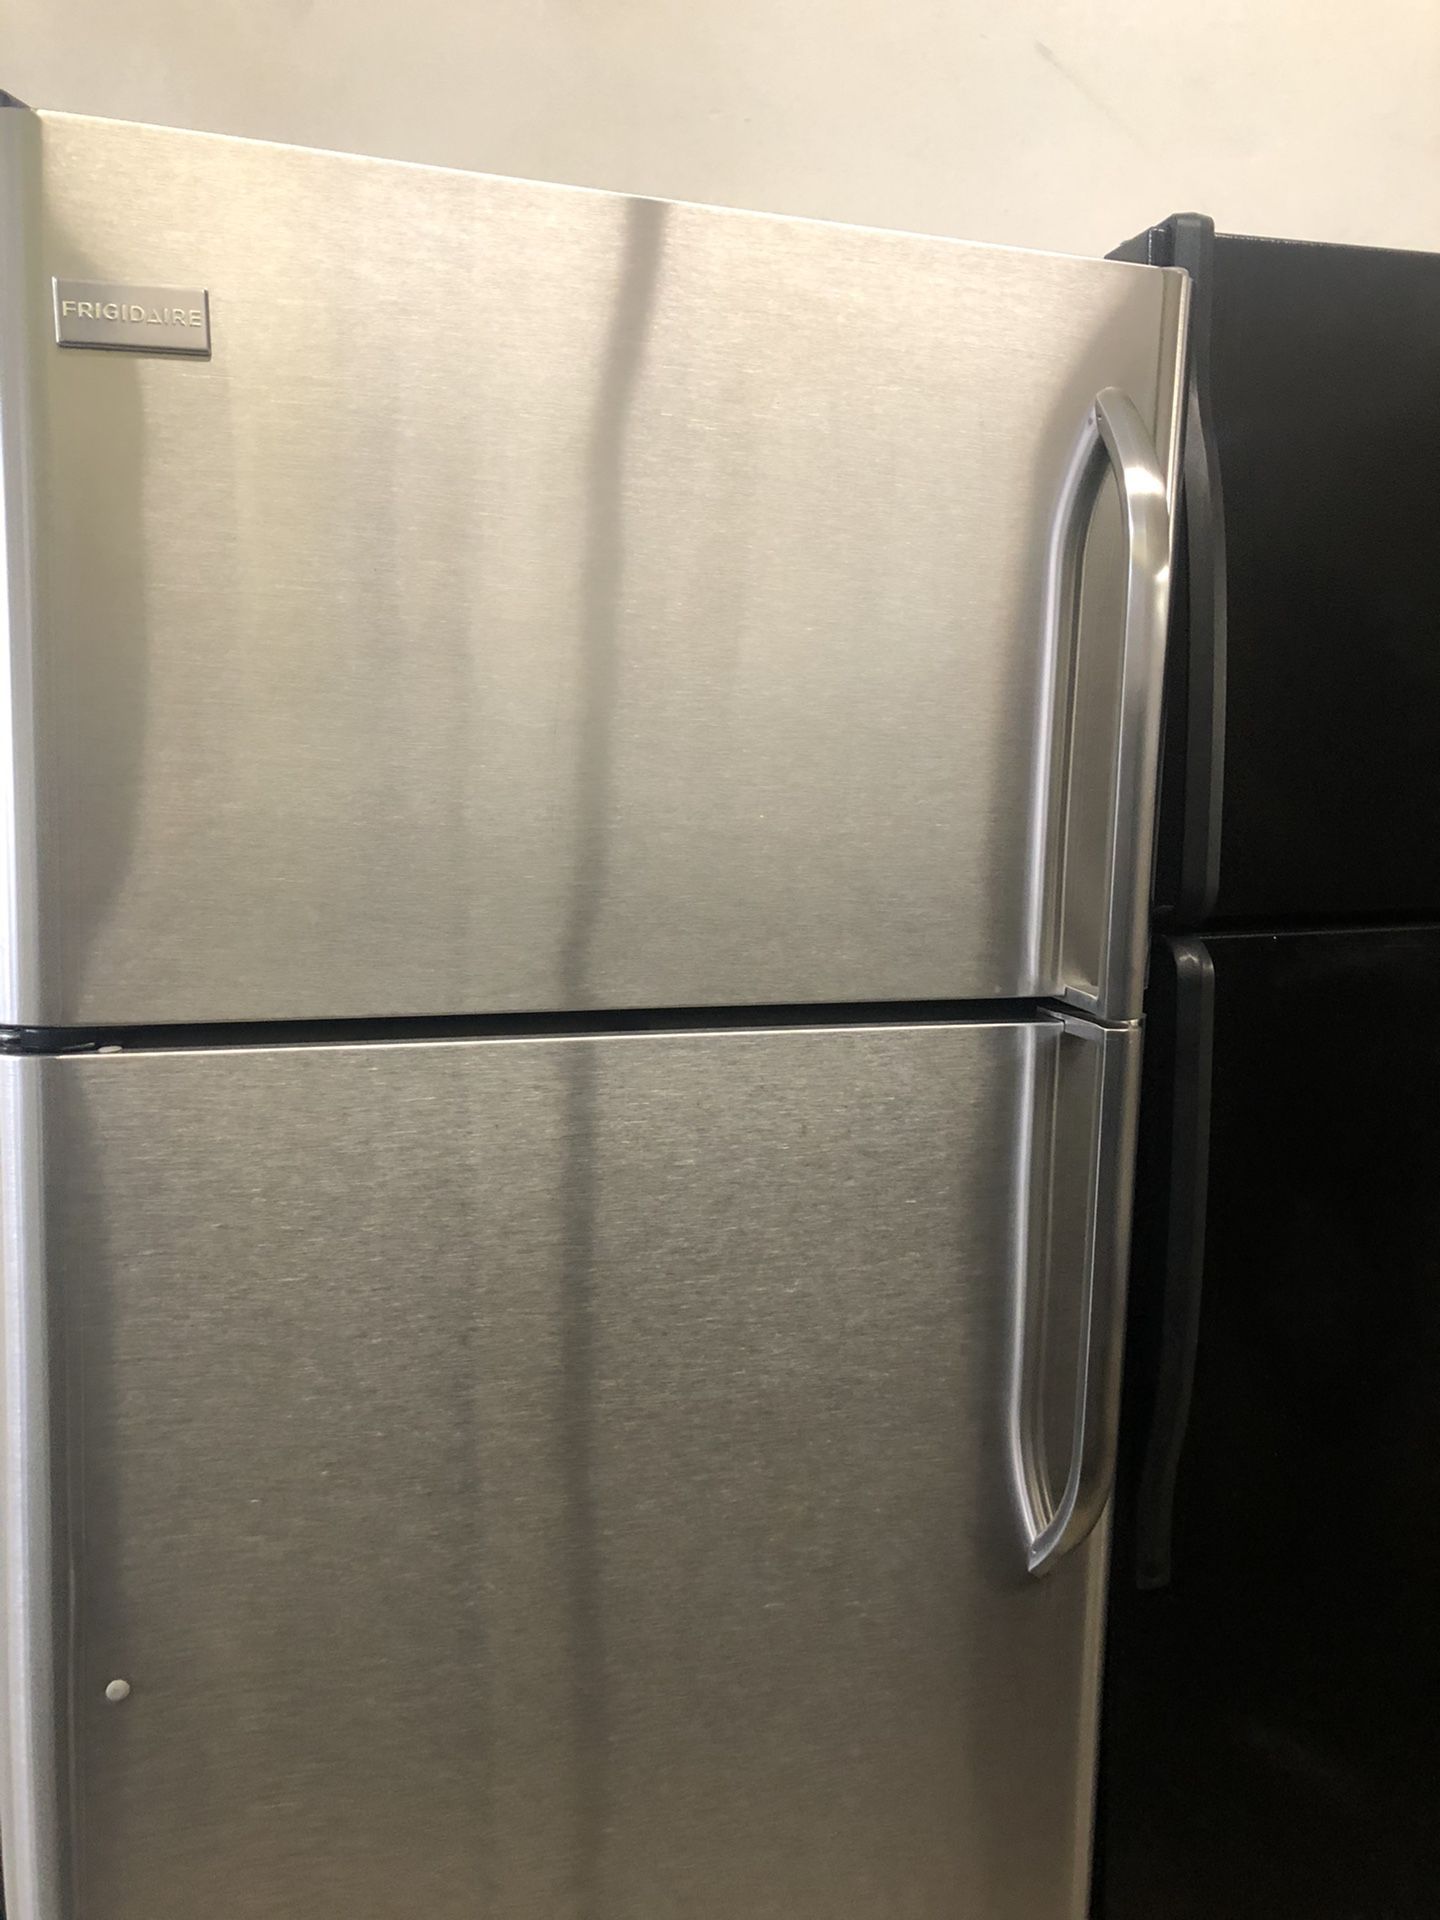 Frigidaire refrigerator 18 cubic feet used